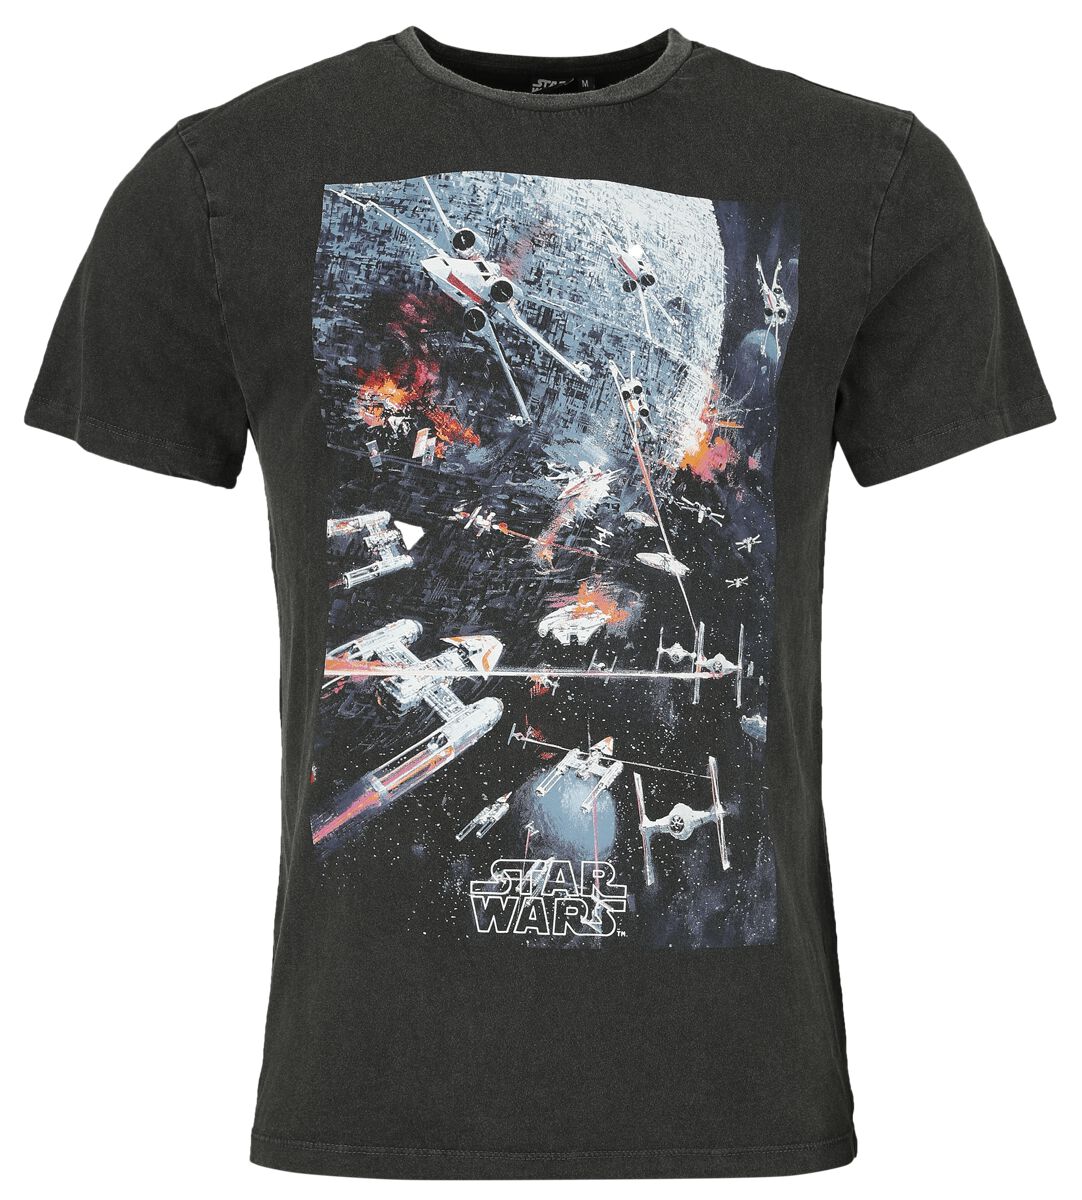 Star Wars Classic - Space War T-Shirt schwarz in S